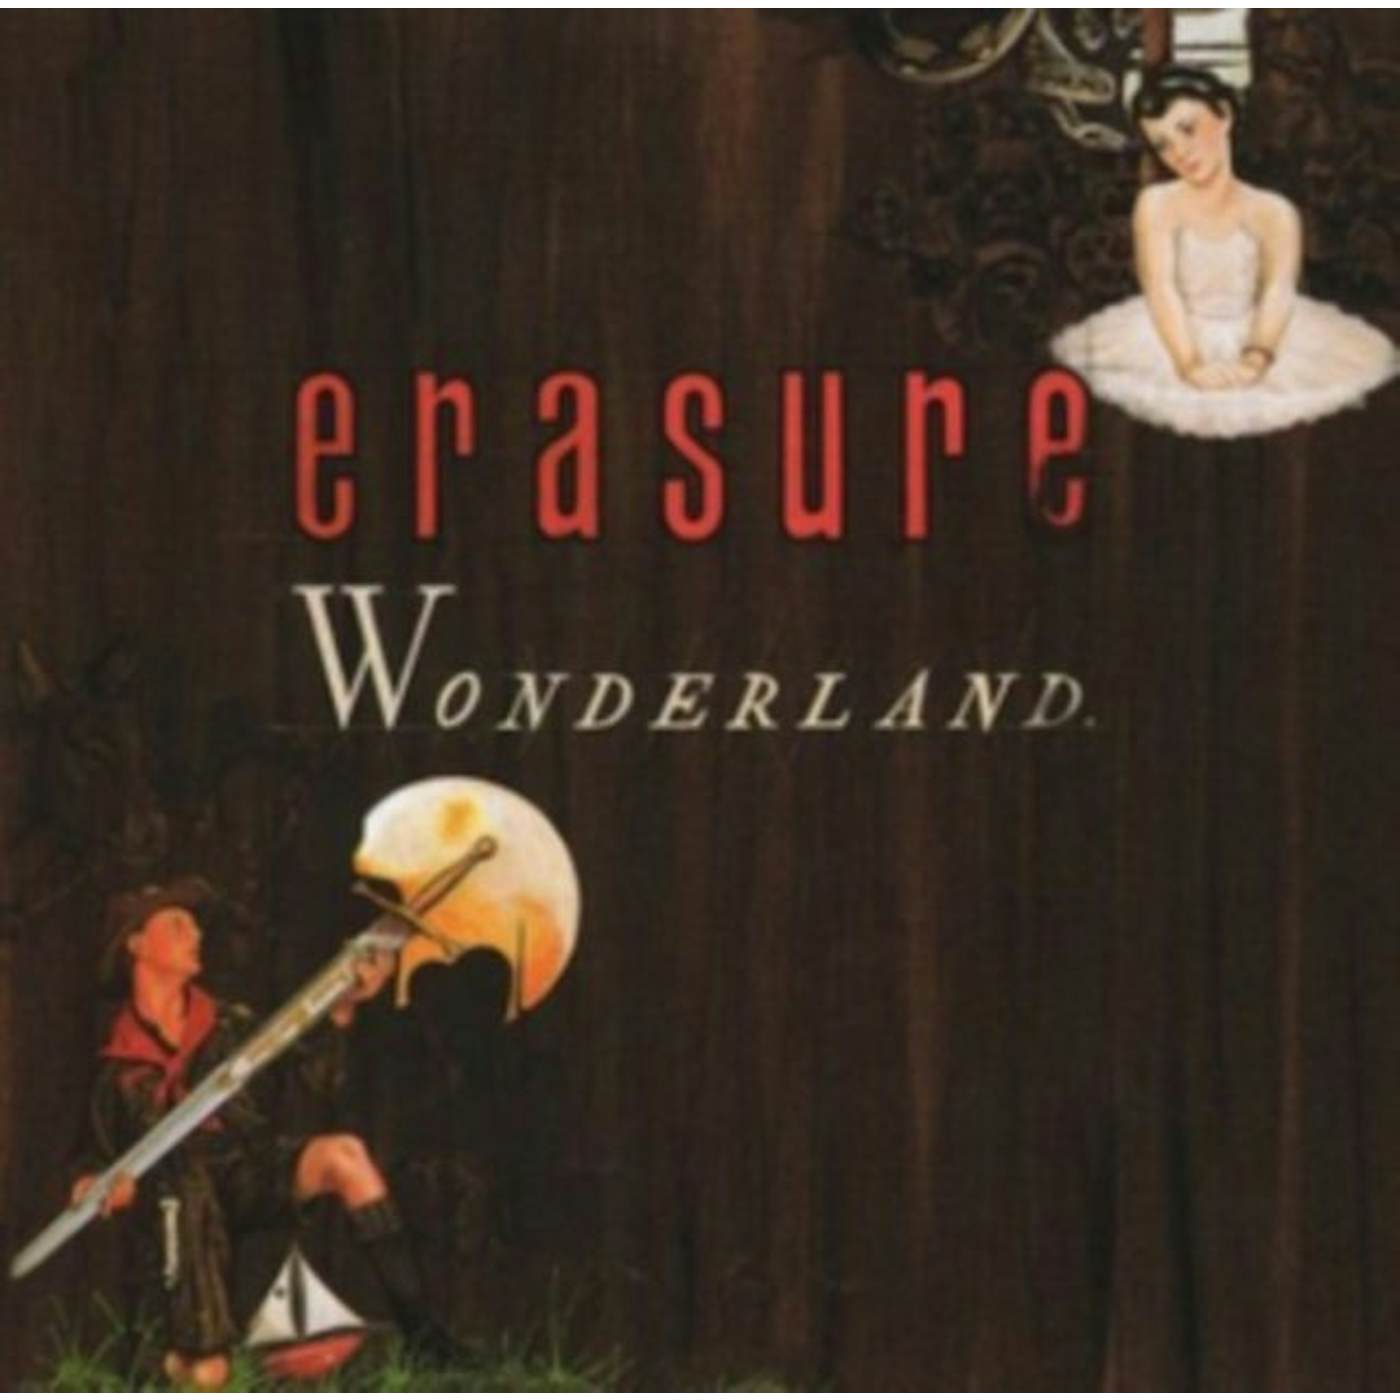 Erasure LP Vinyl Record - Wonderland